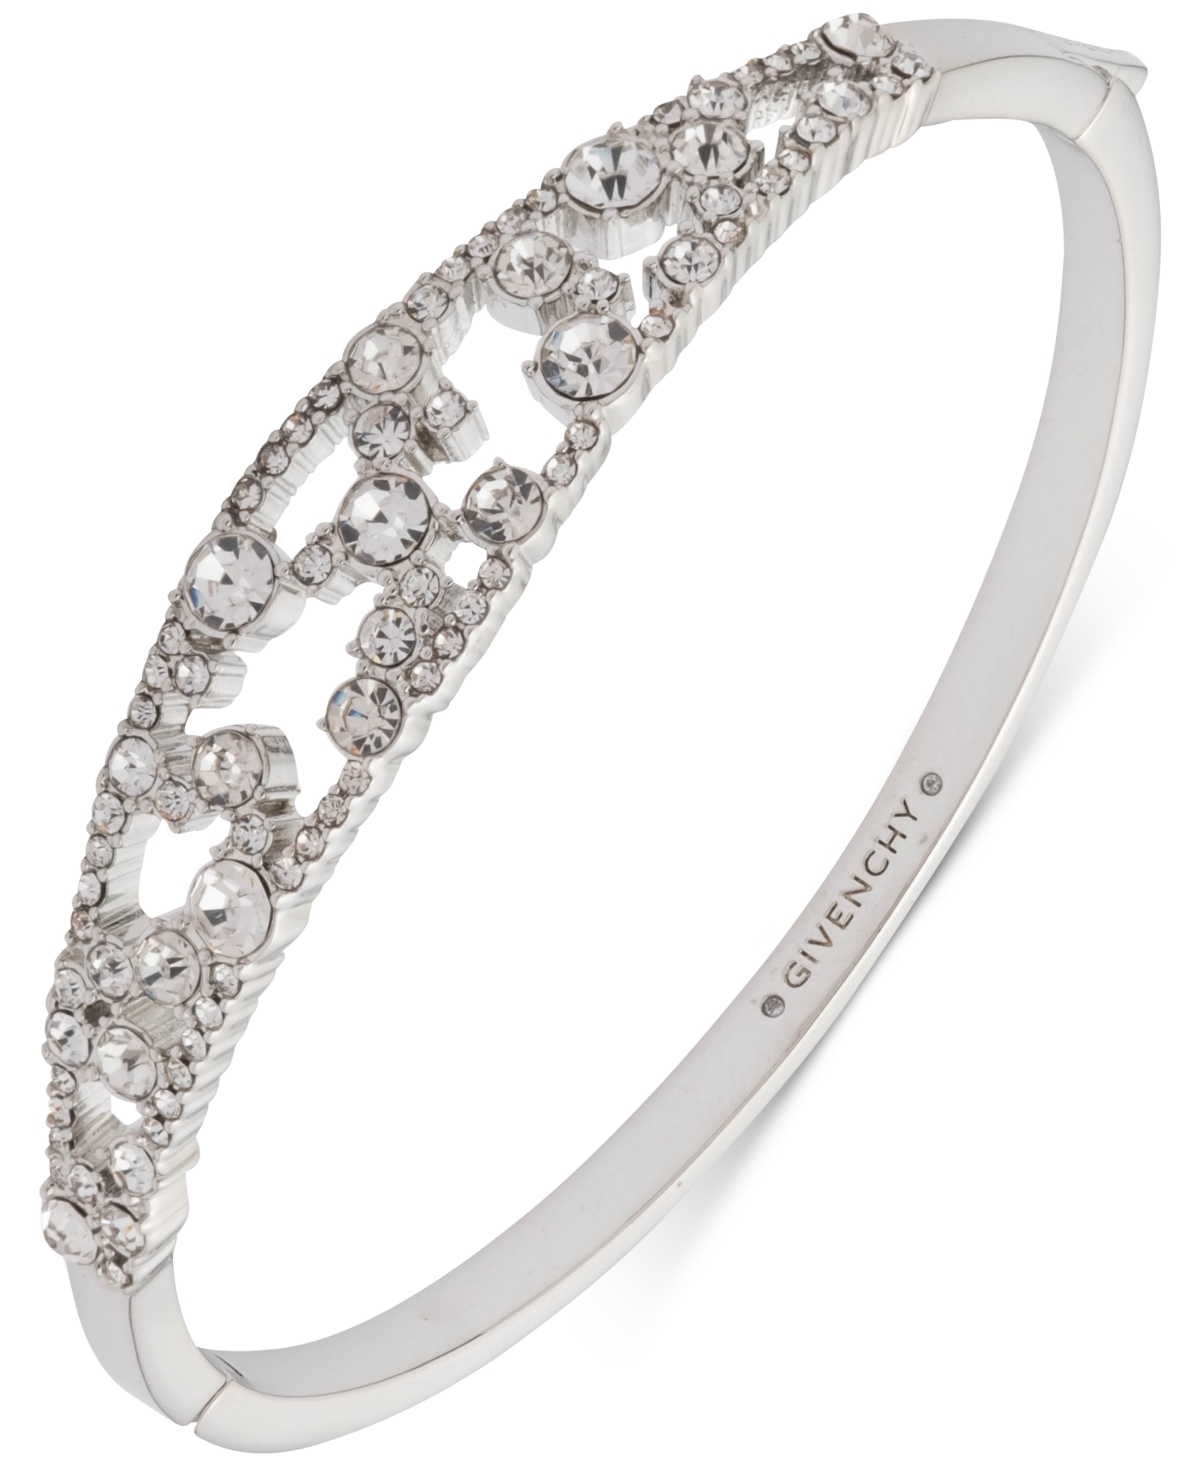 Givenchy Silver-Tone Crystal Bangle Bracelet